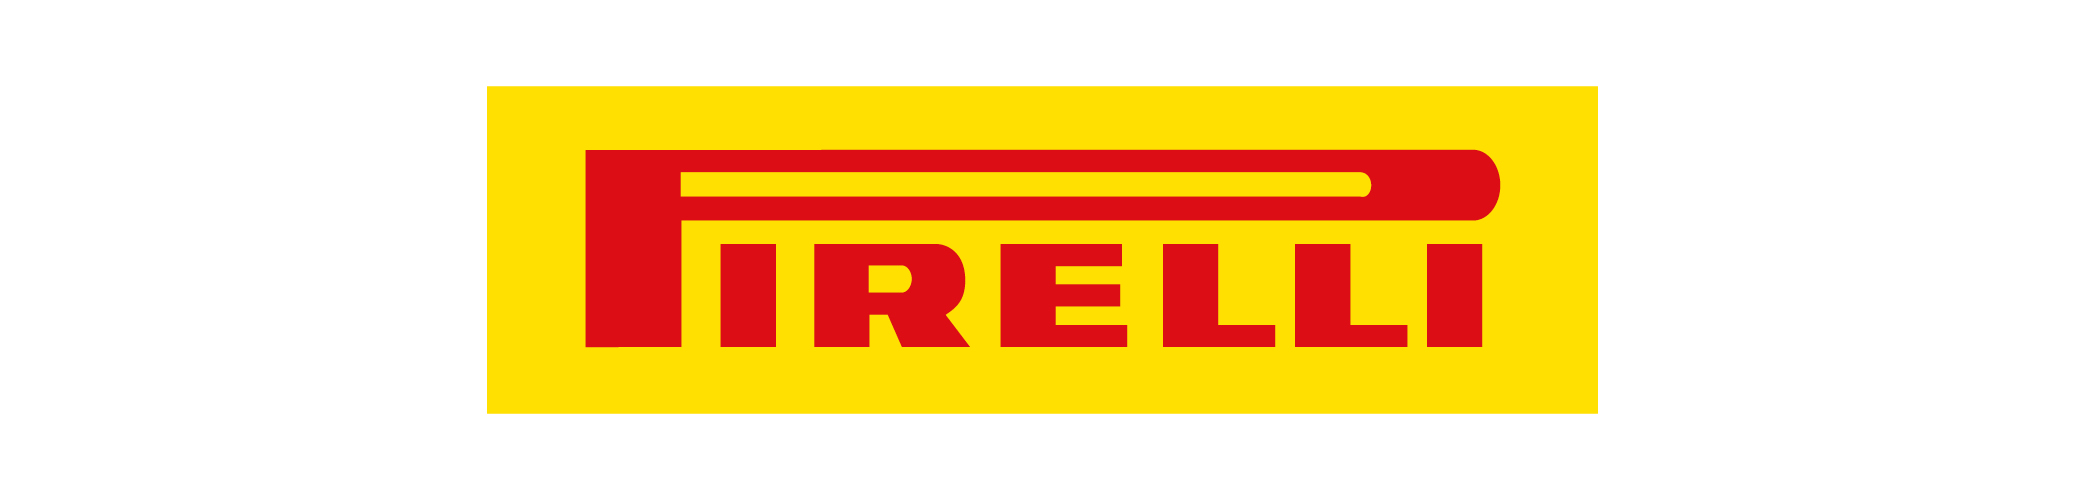 Q Team-Merken-Pirelli-2085x500